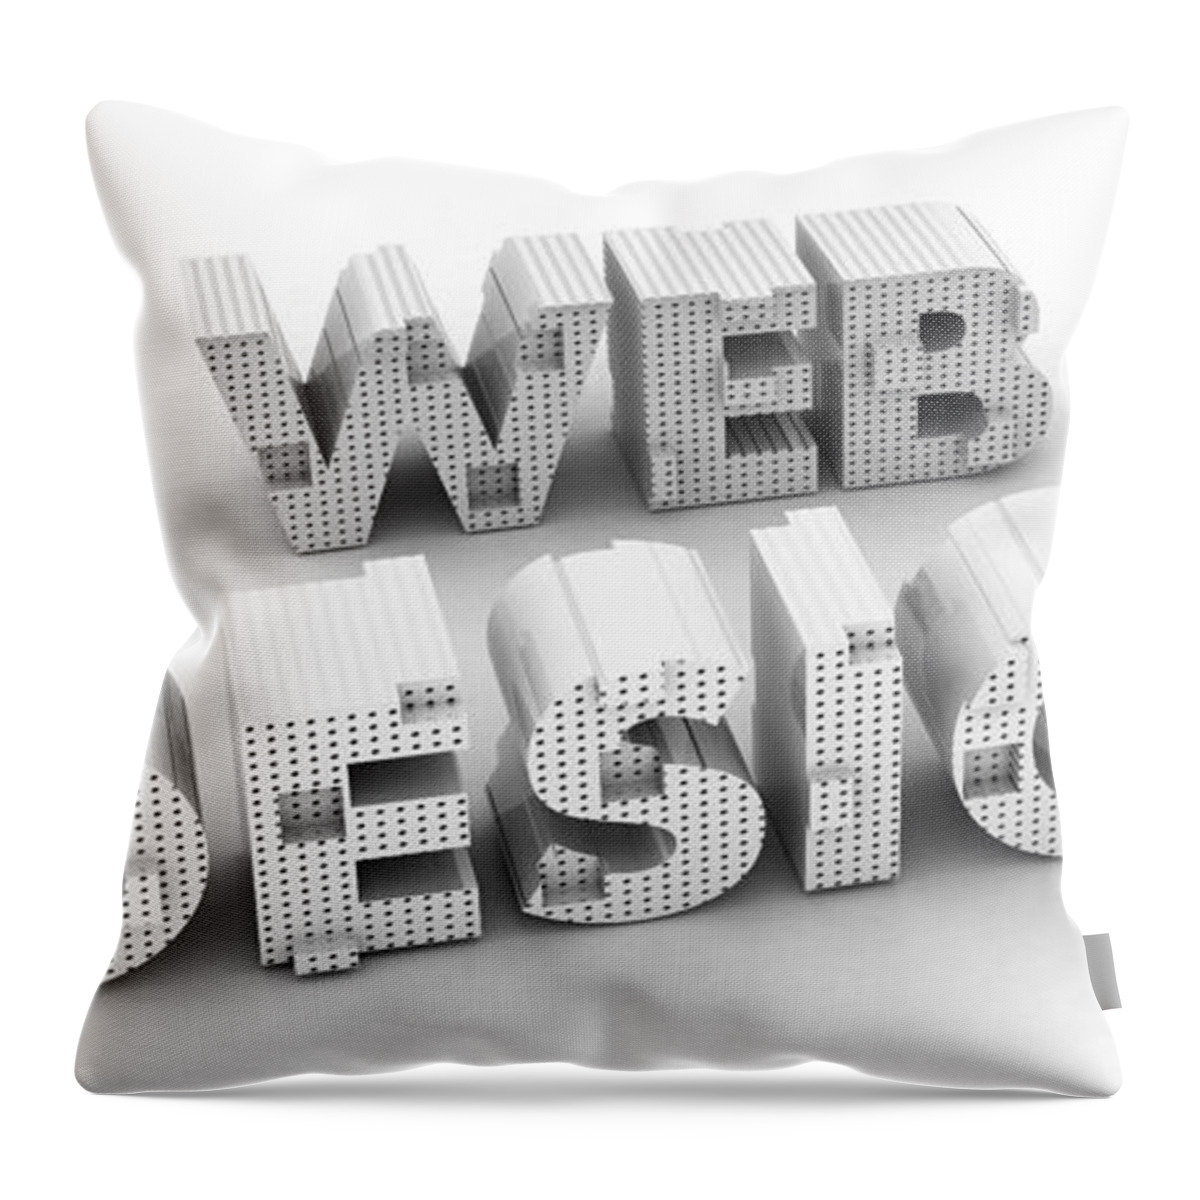 Internet Throw Pillow featuring the digital art Internet - Web Design by Stefano Senise